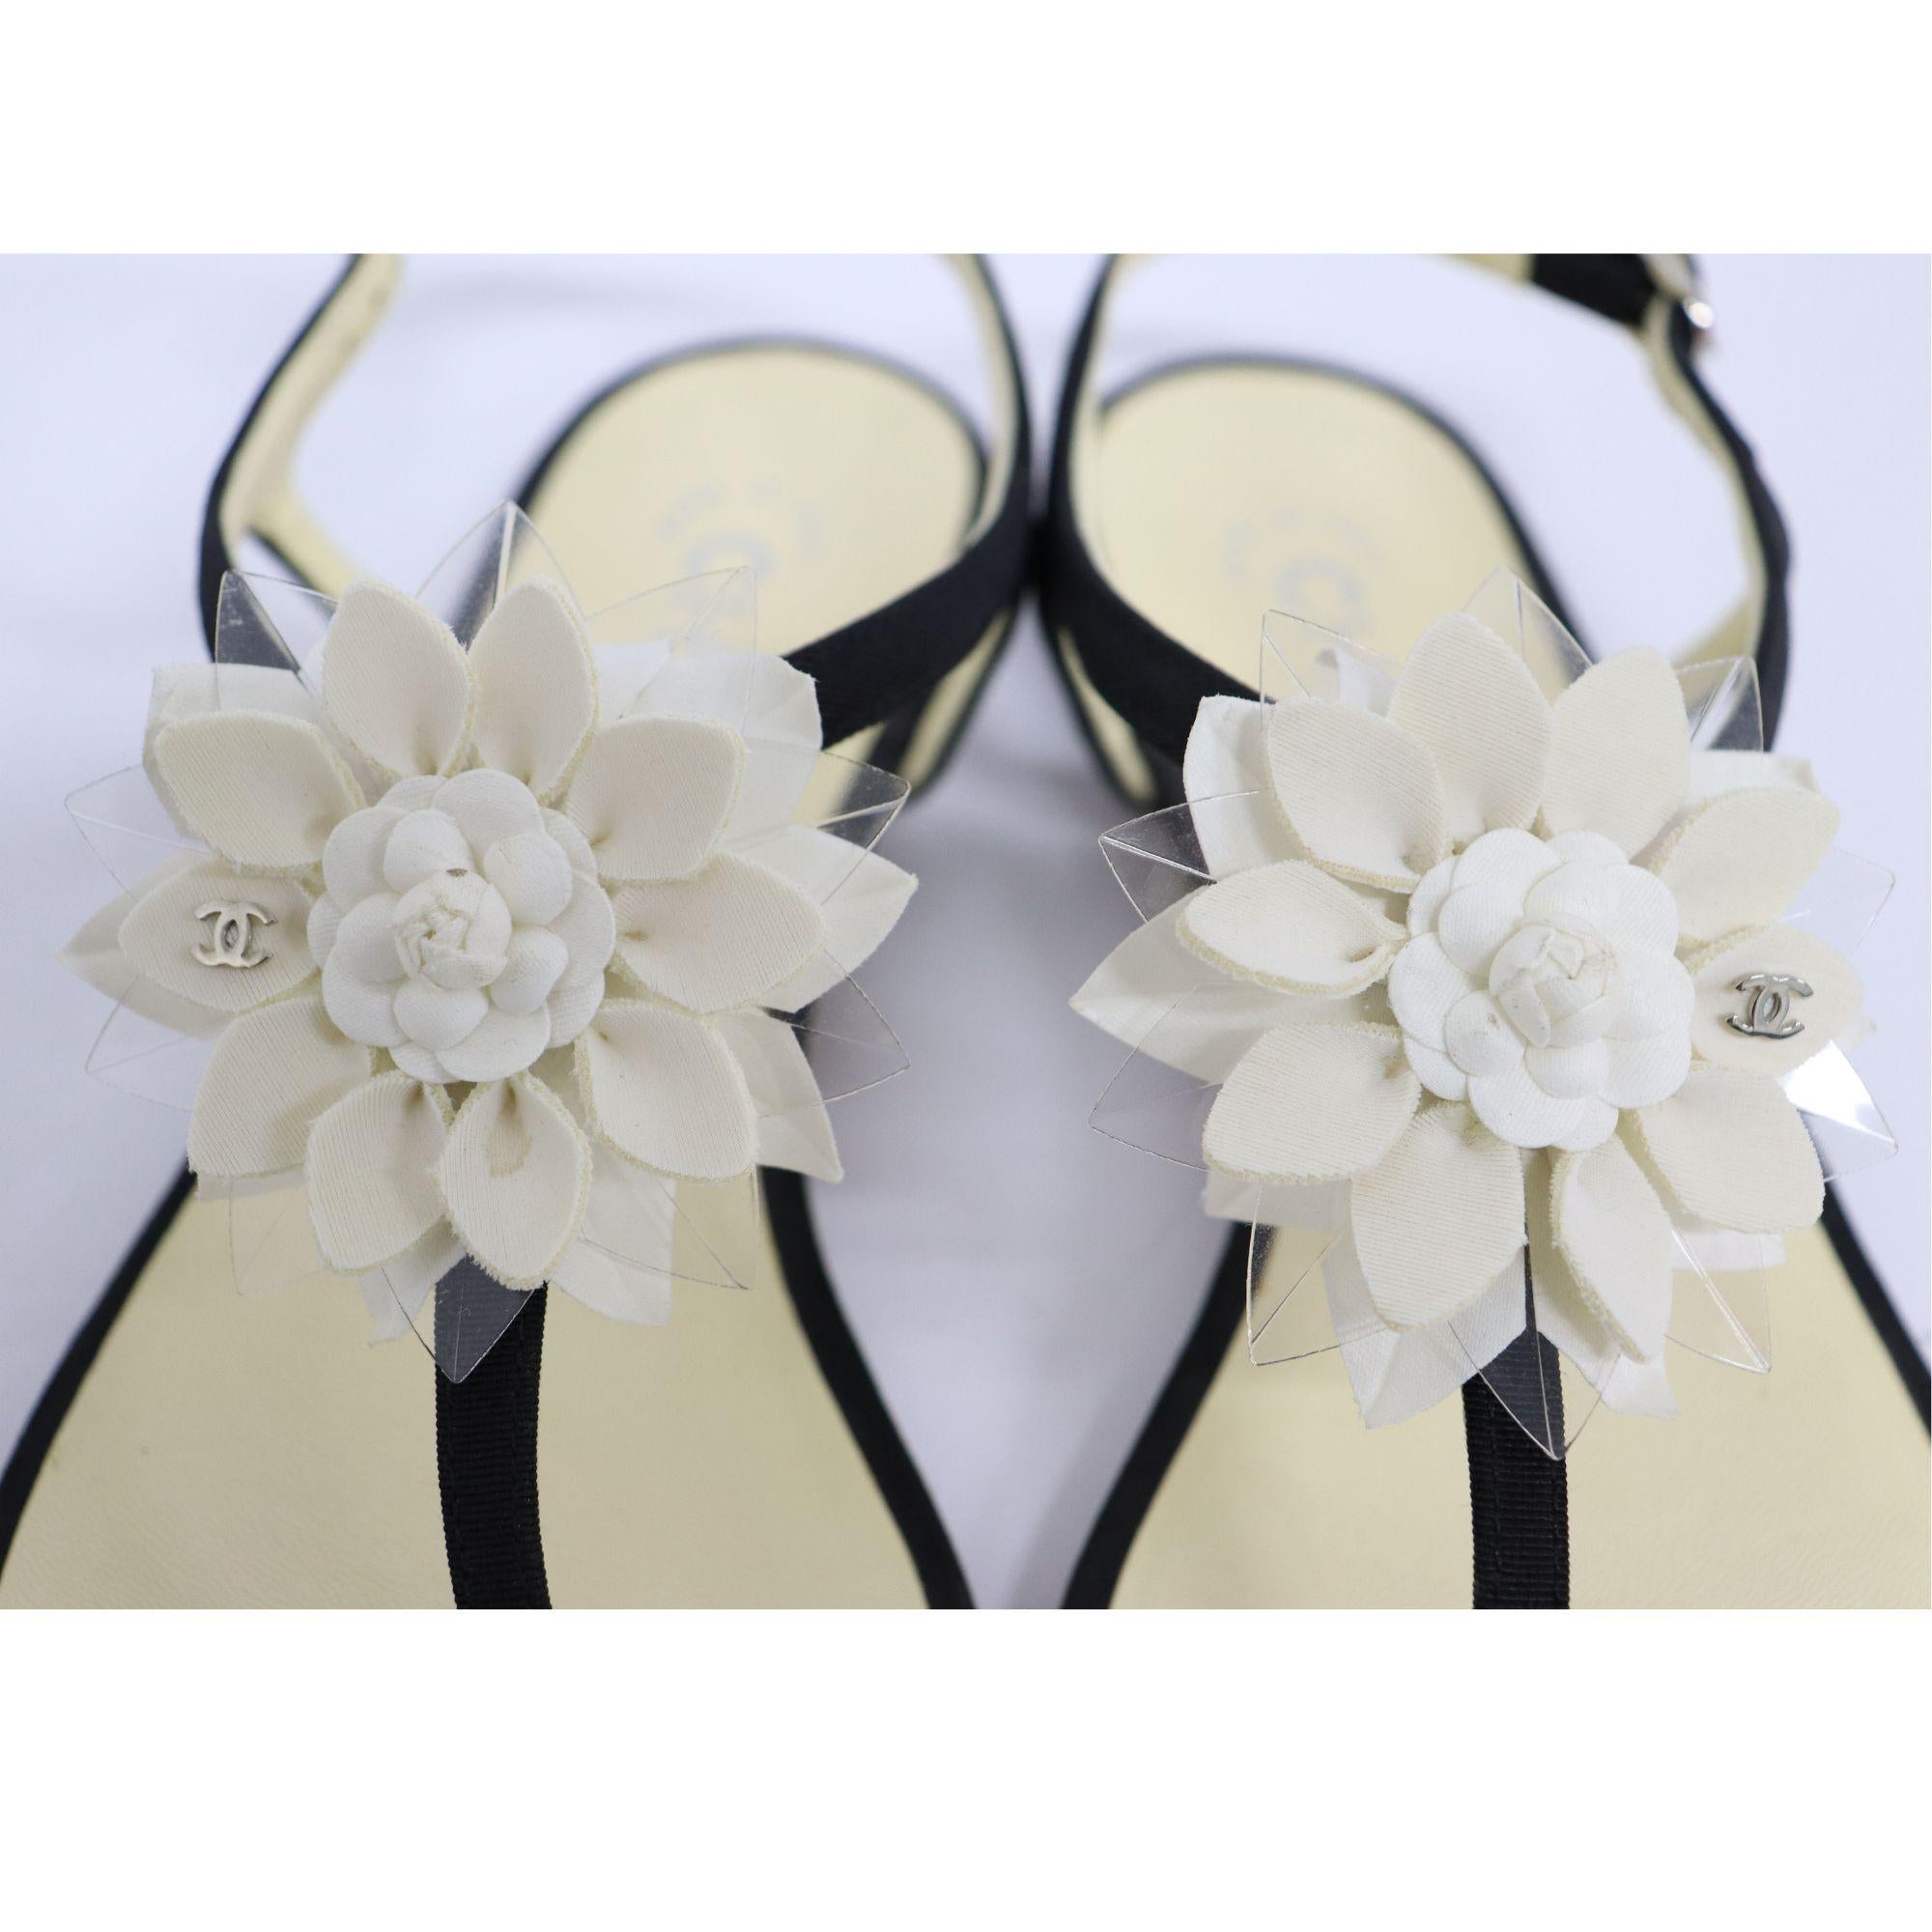 Chanel 3d Flower Sandals Size EU 37 1